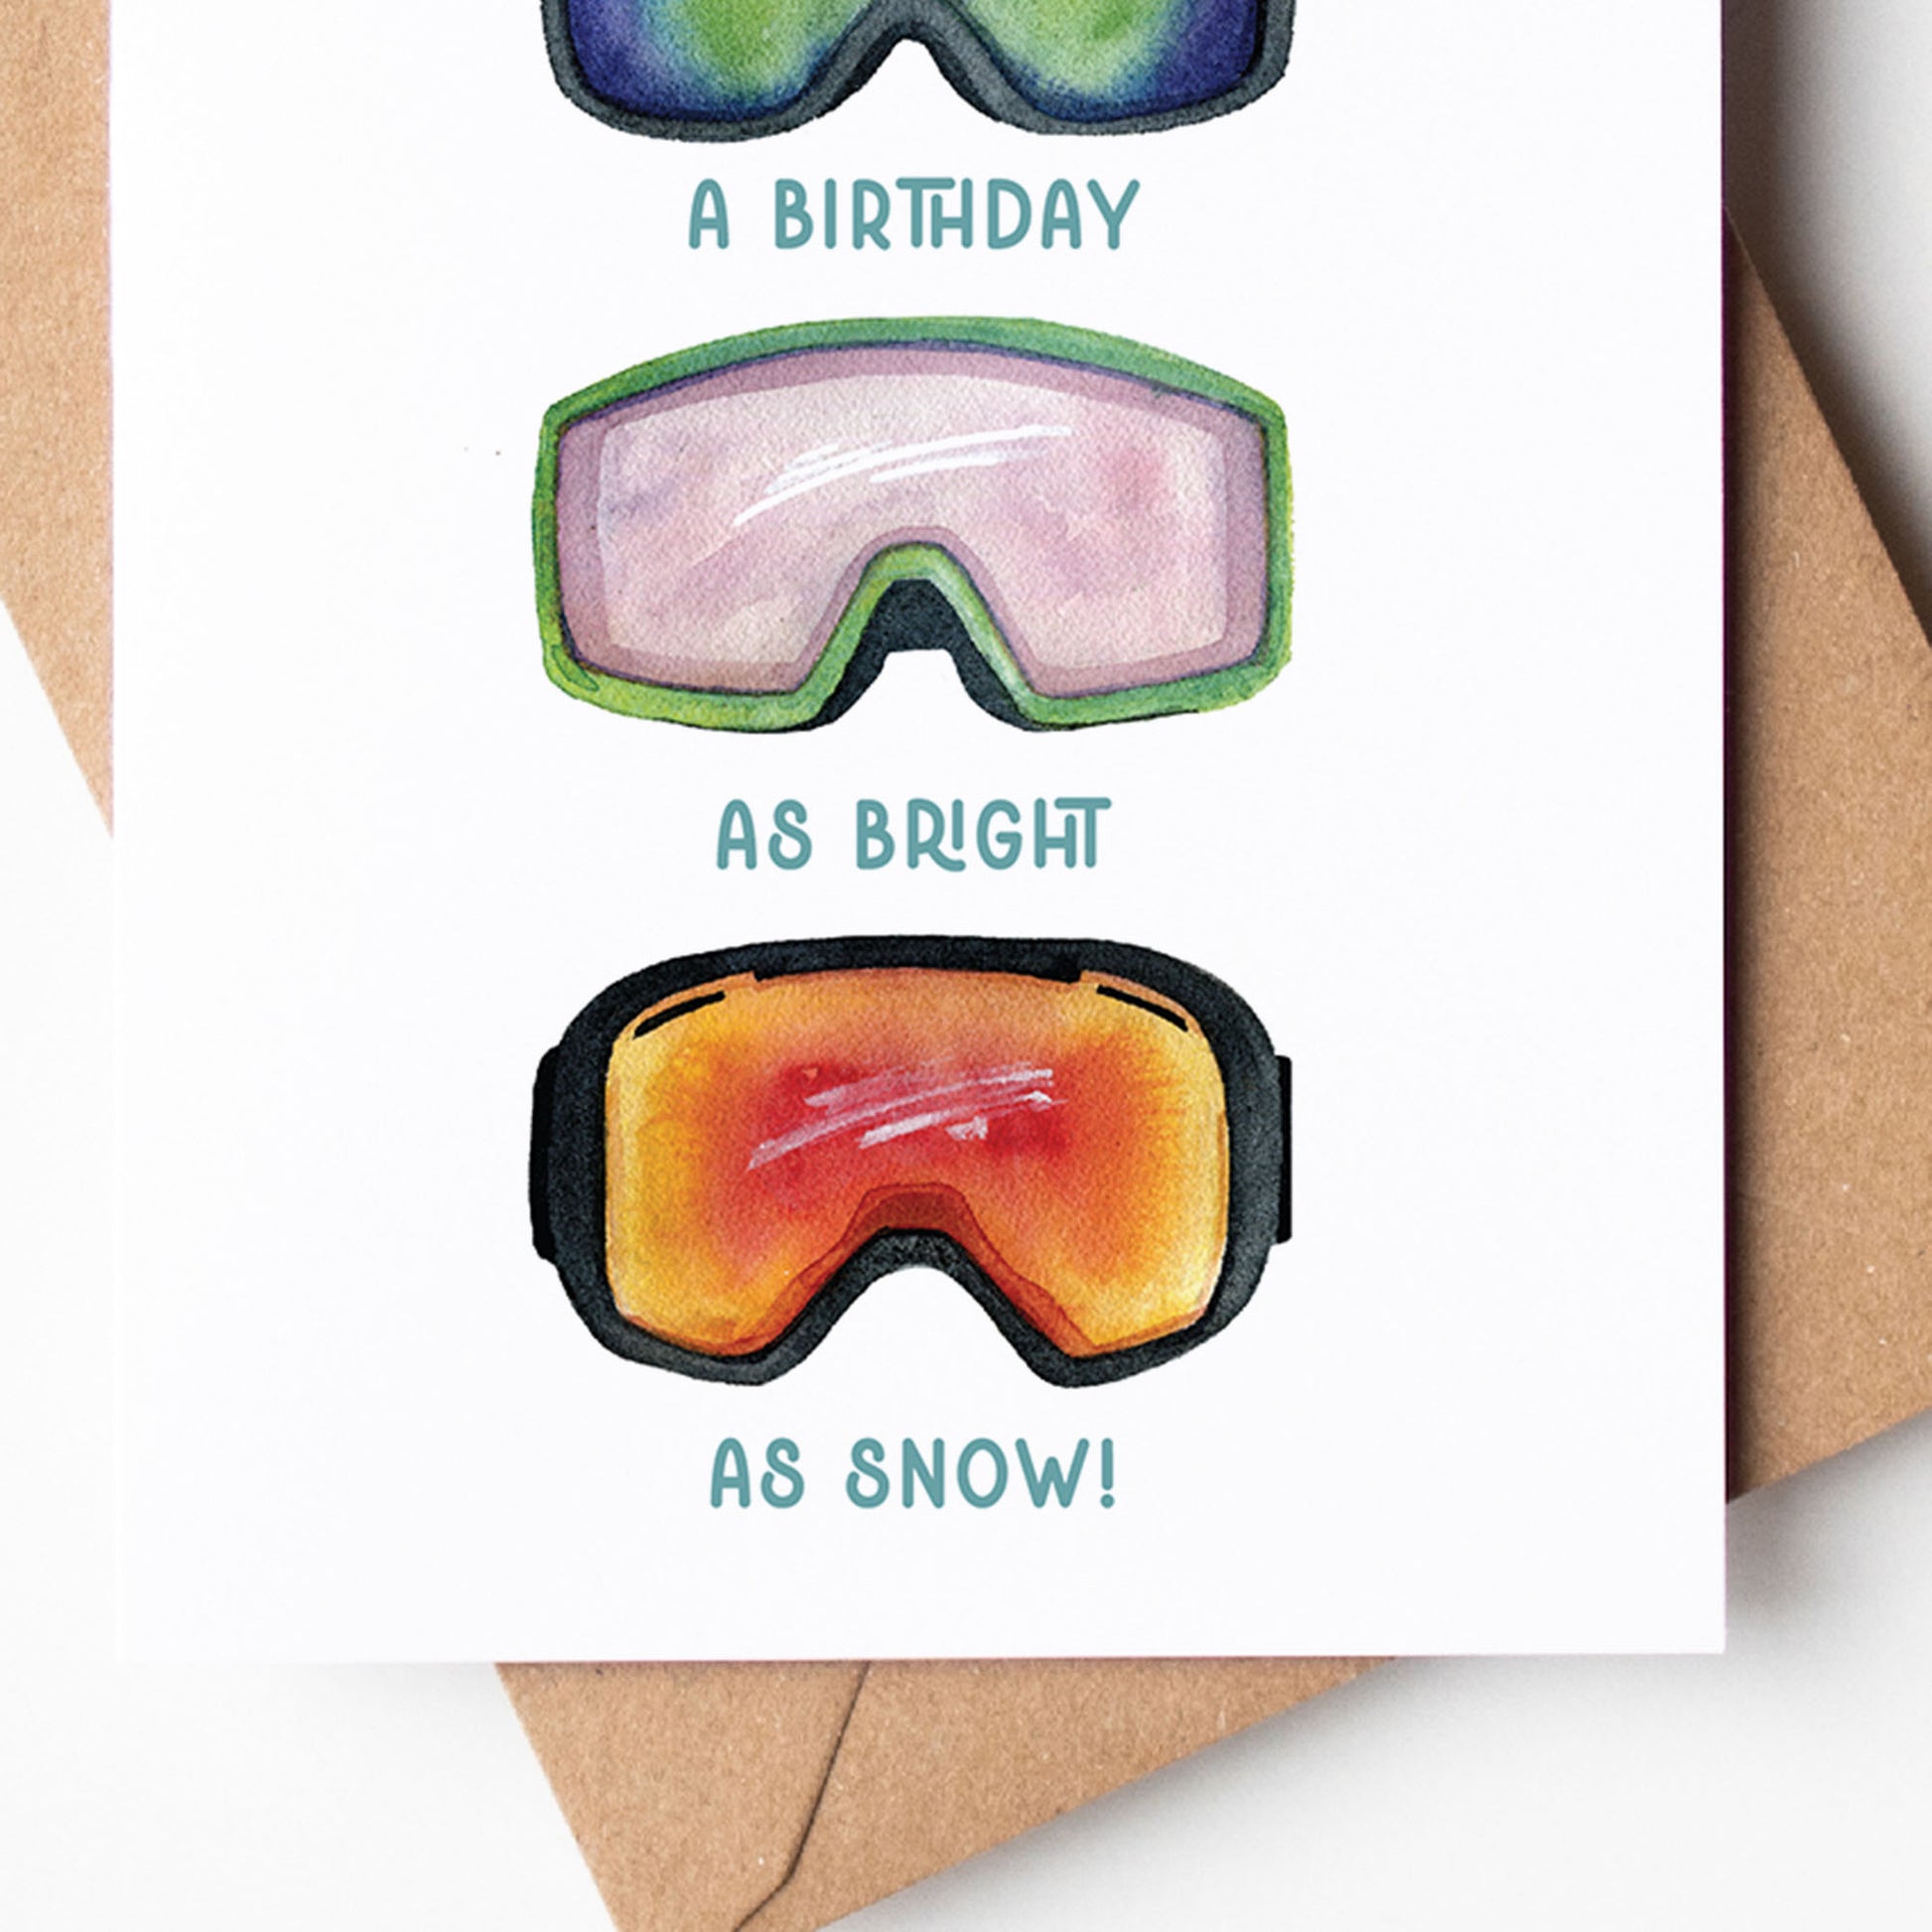 a birthday card with three ski goggles on it